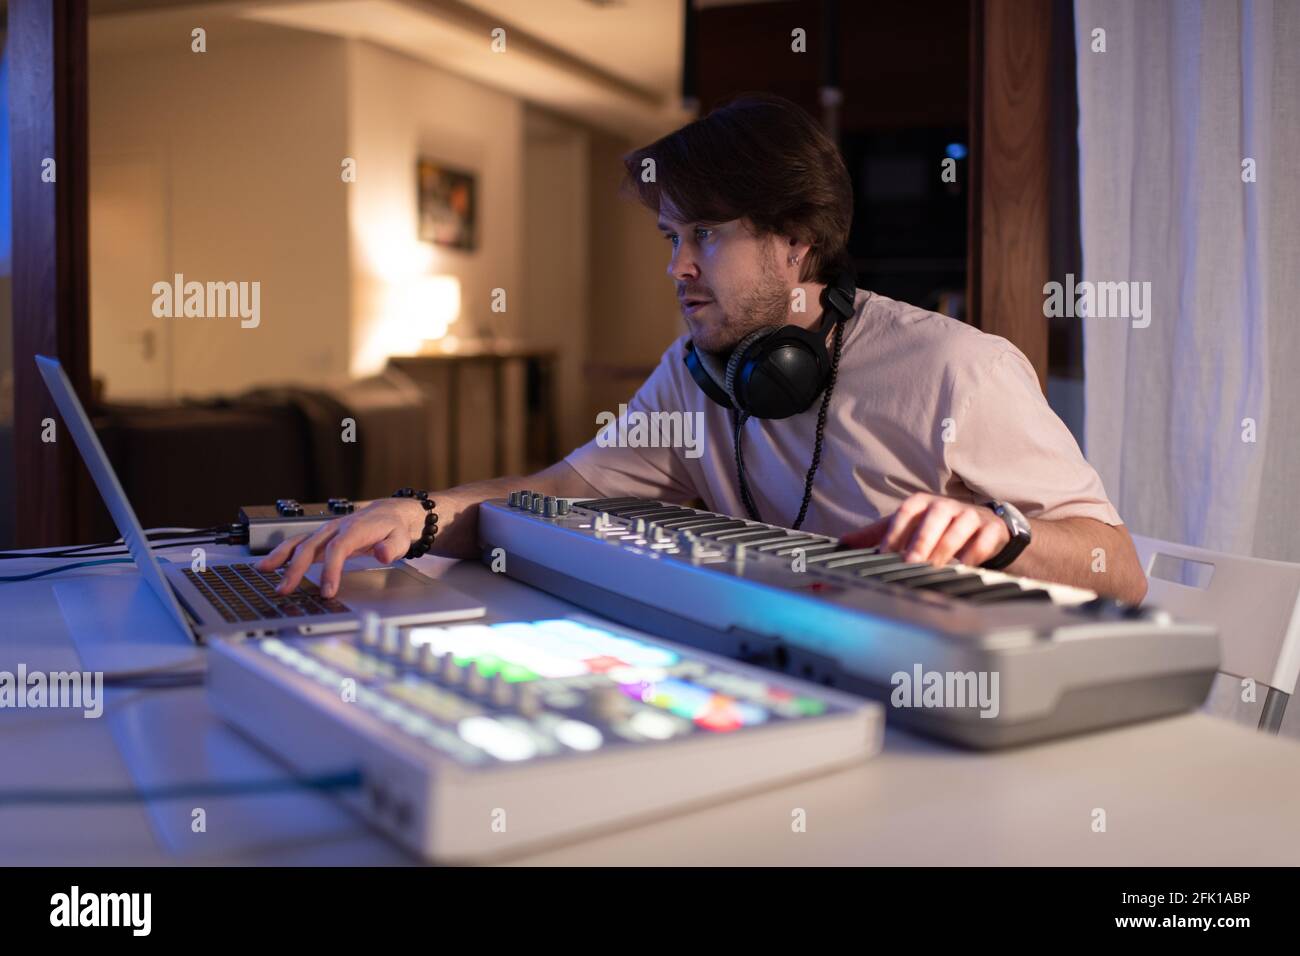 Male musician using laptop in home recording studio Stock Photo